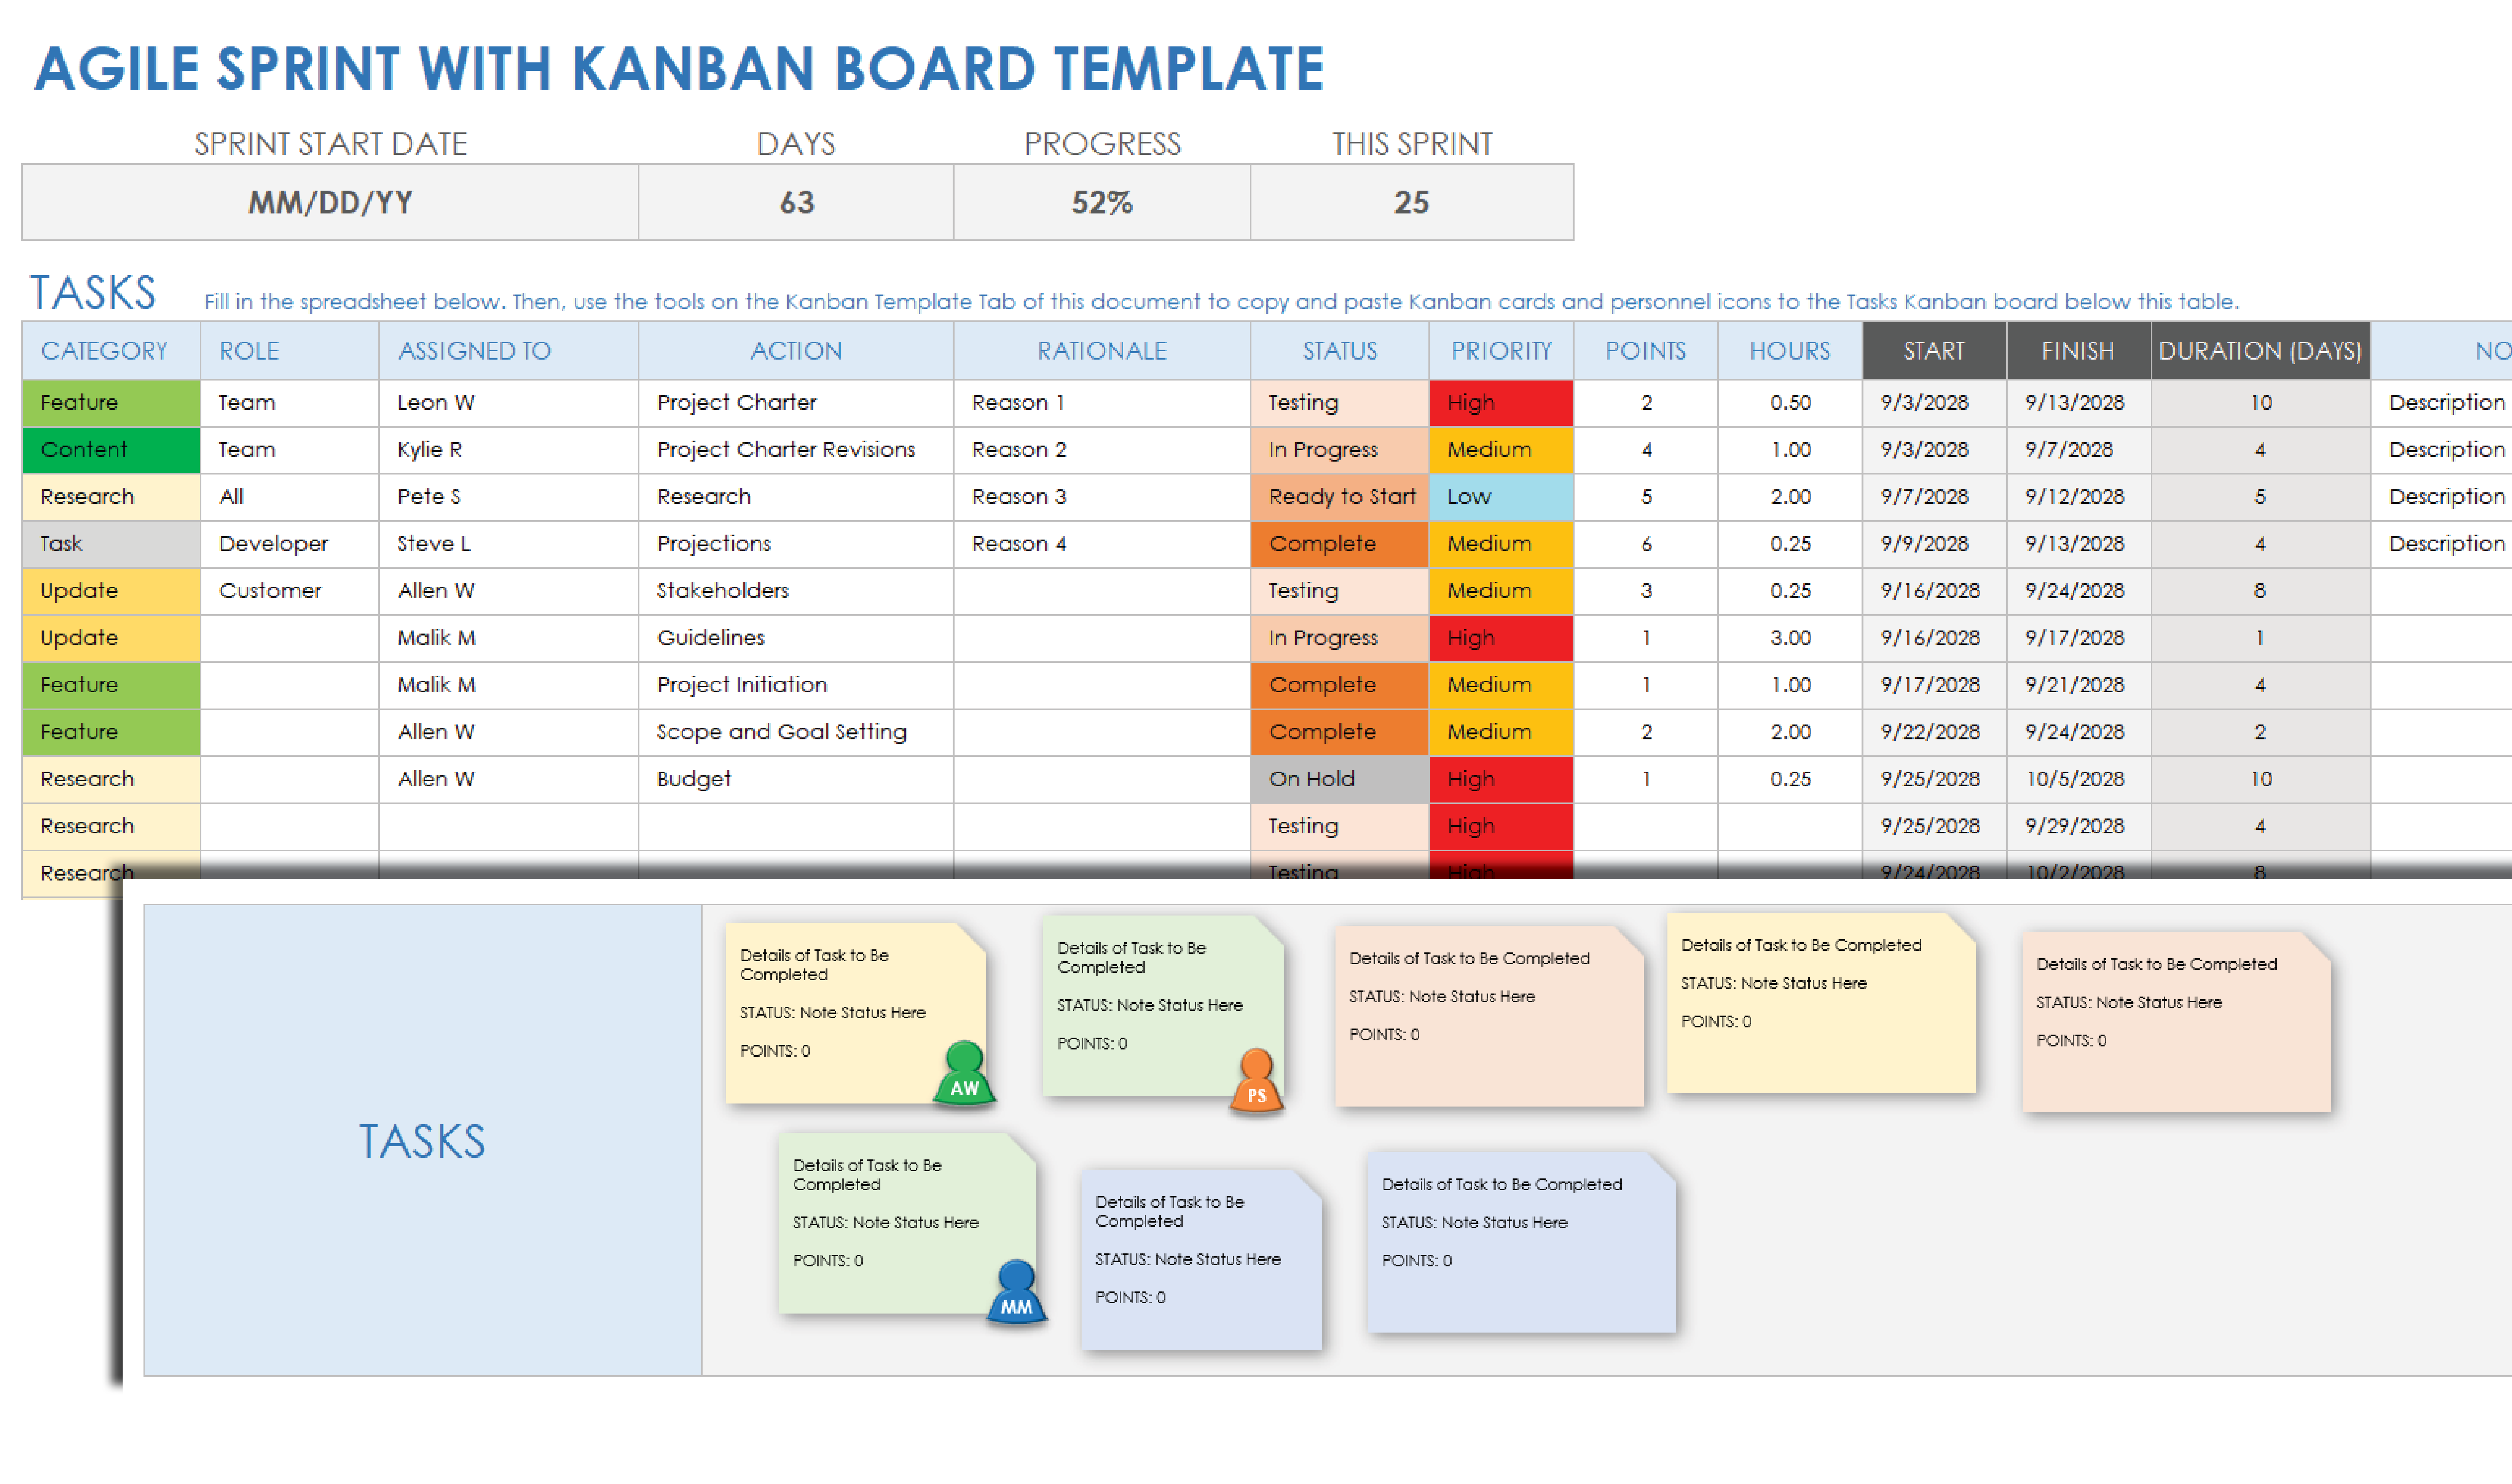 Agile Sprint with Kanban Board Template